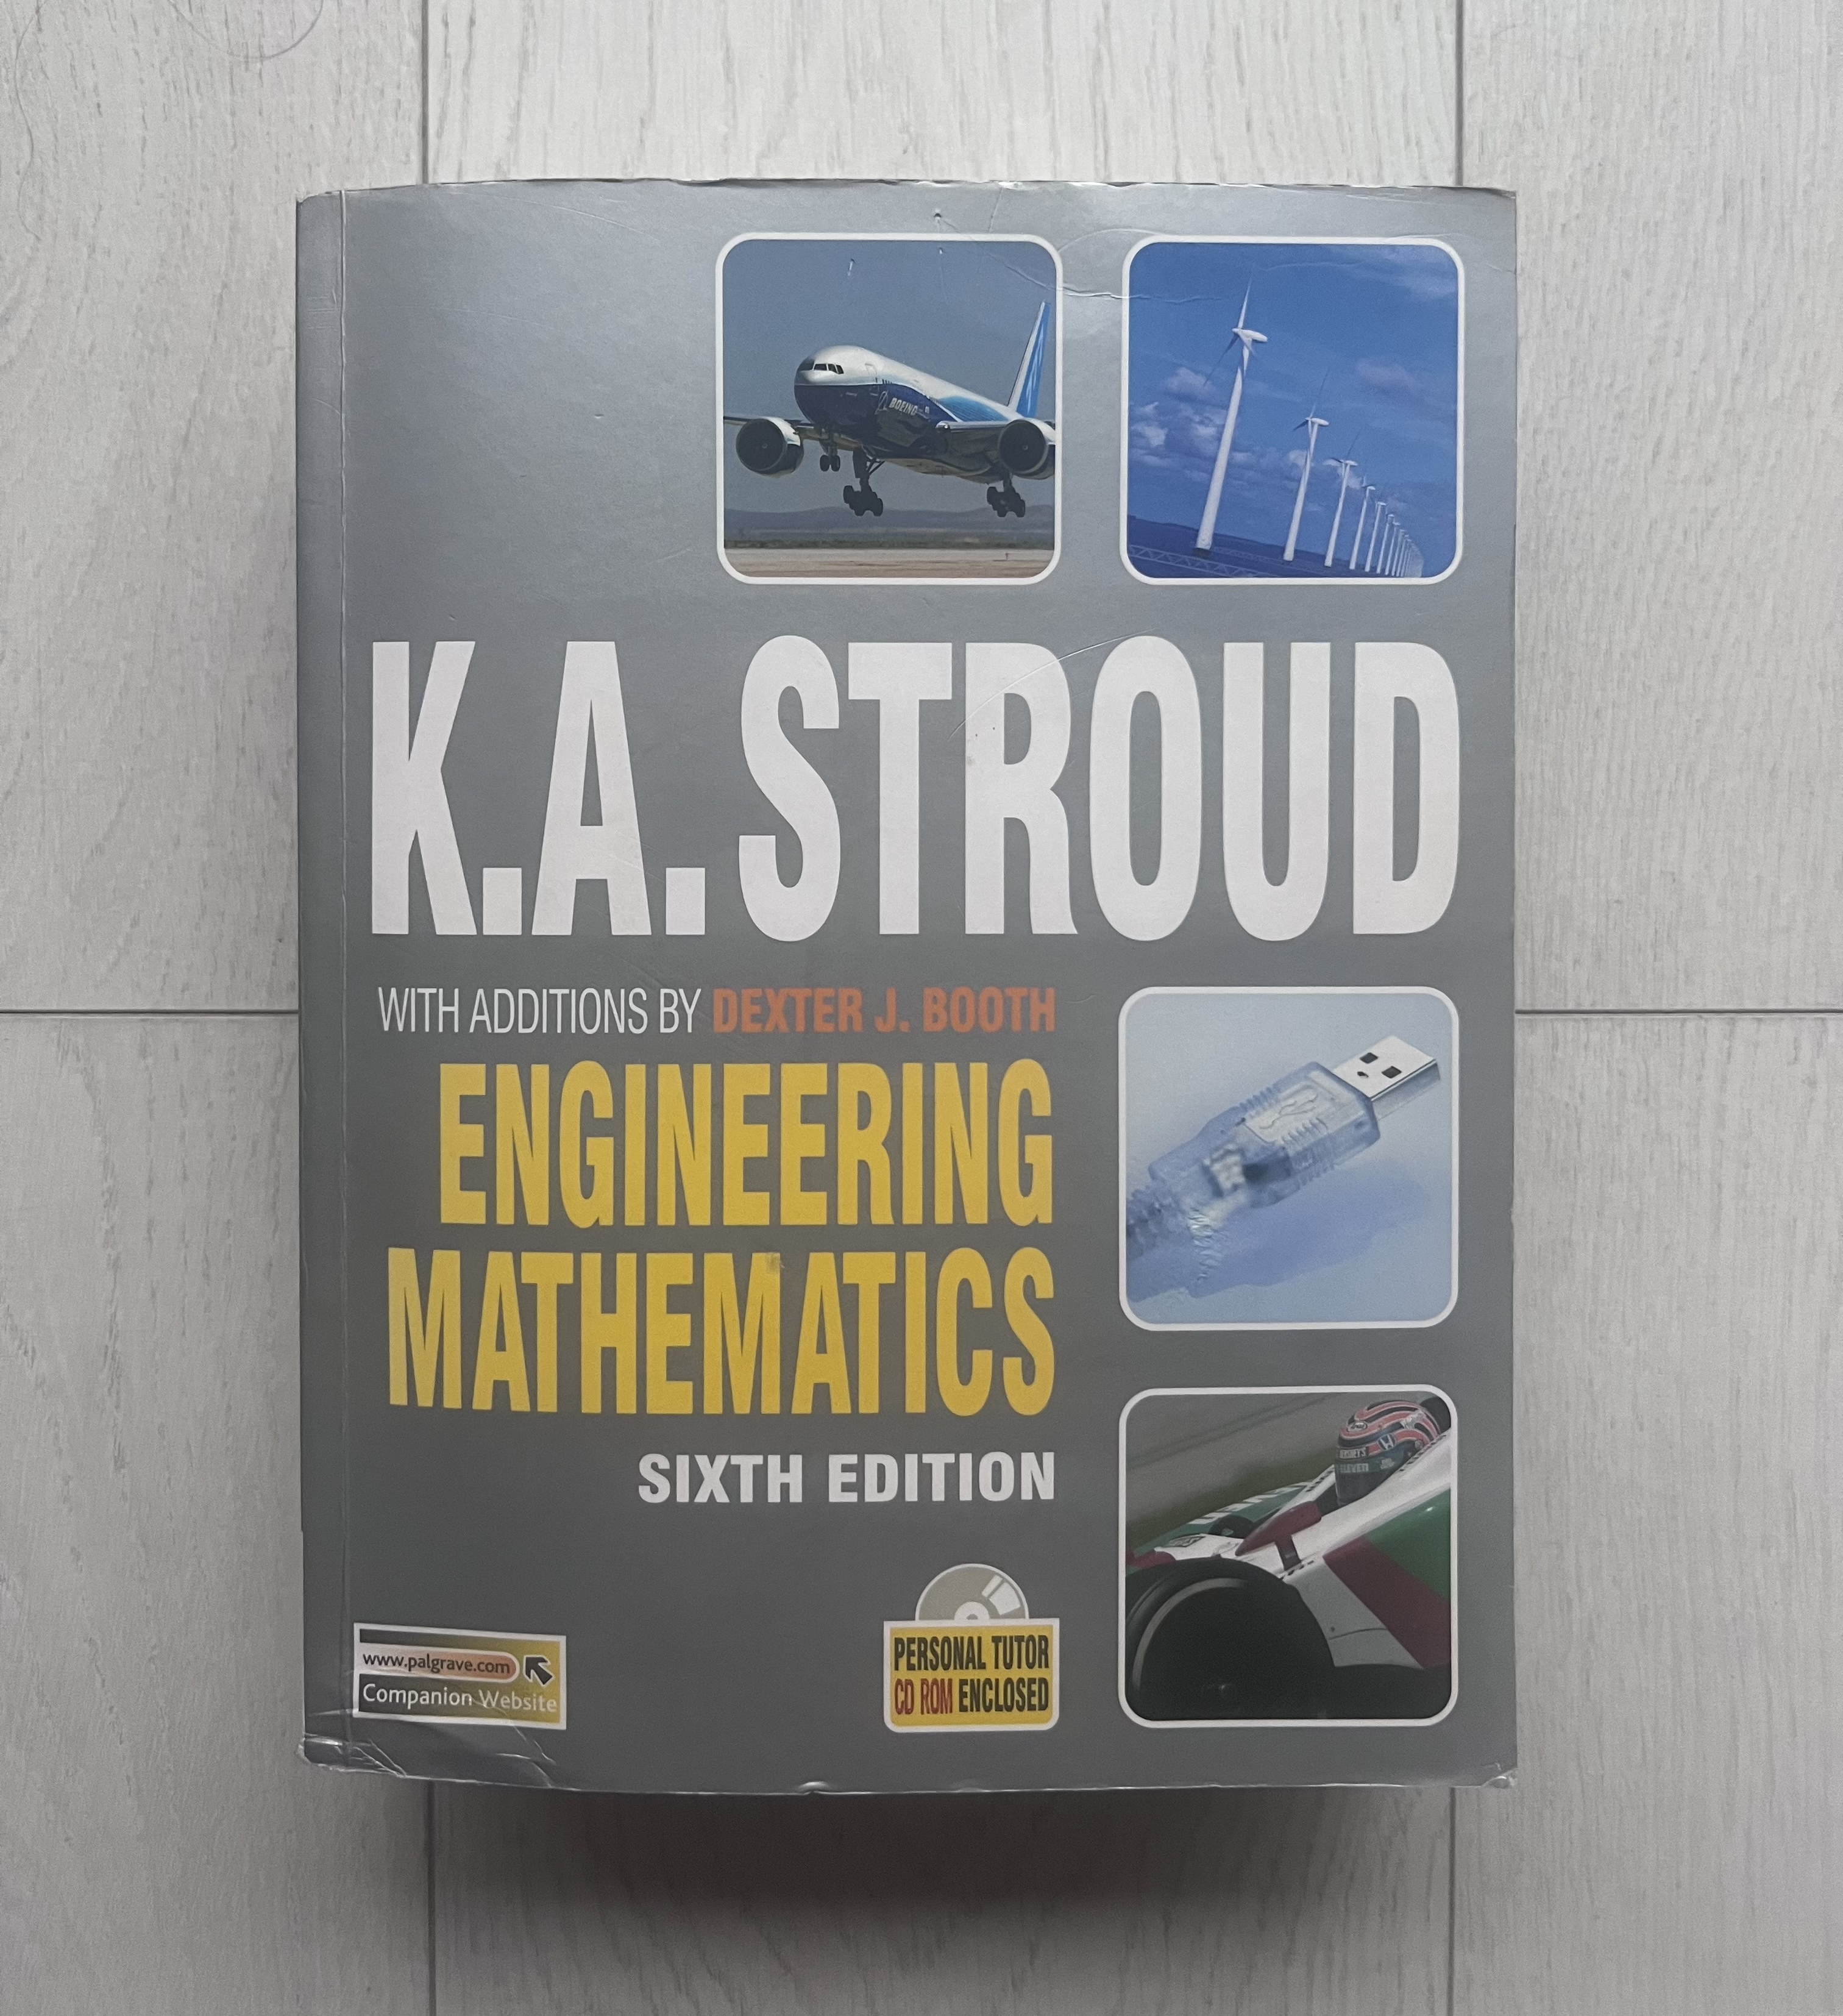 KA STROUD engineering mathematics paperback cover